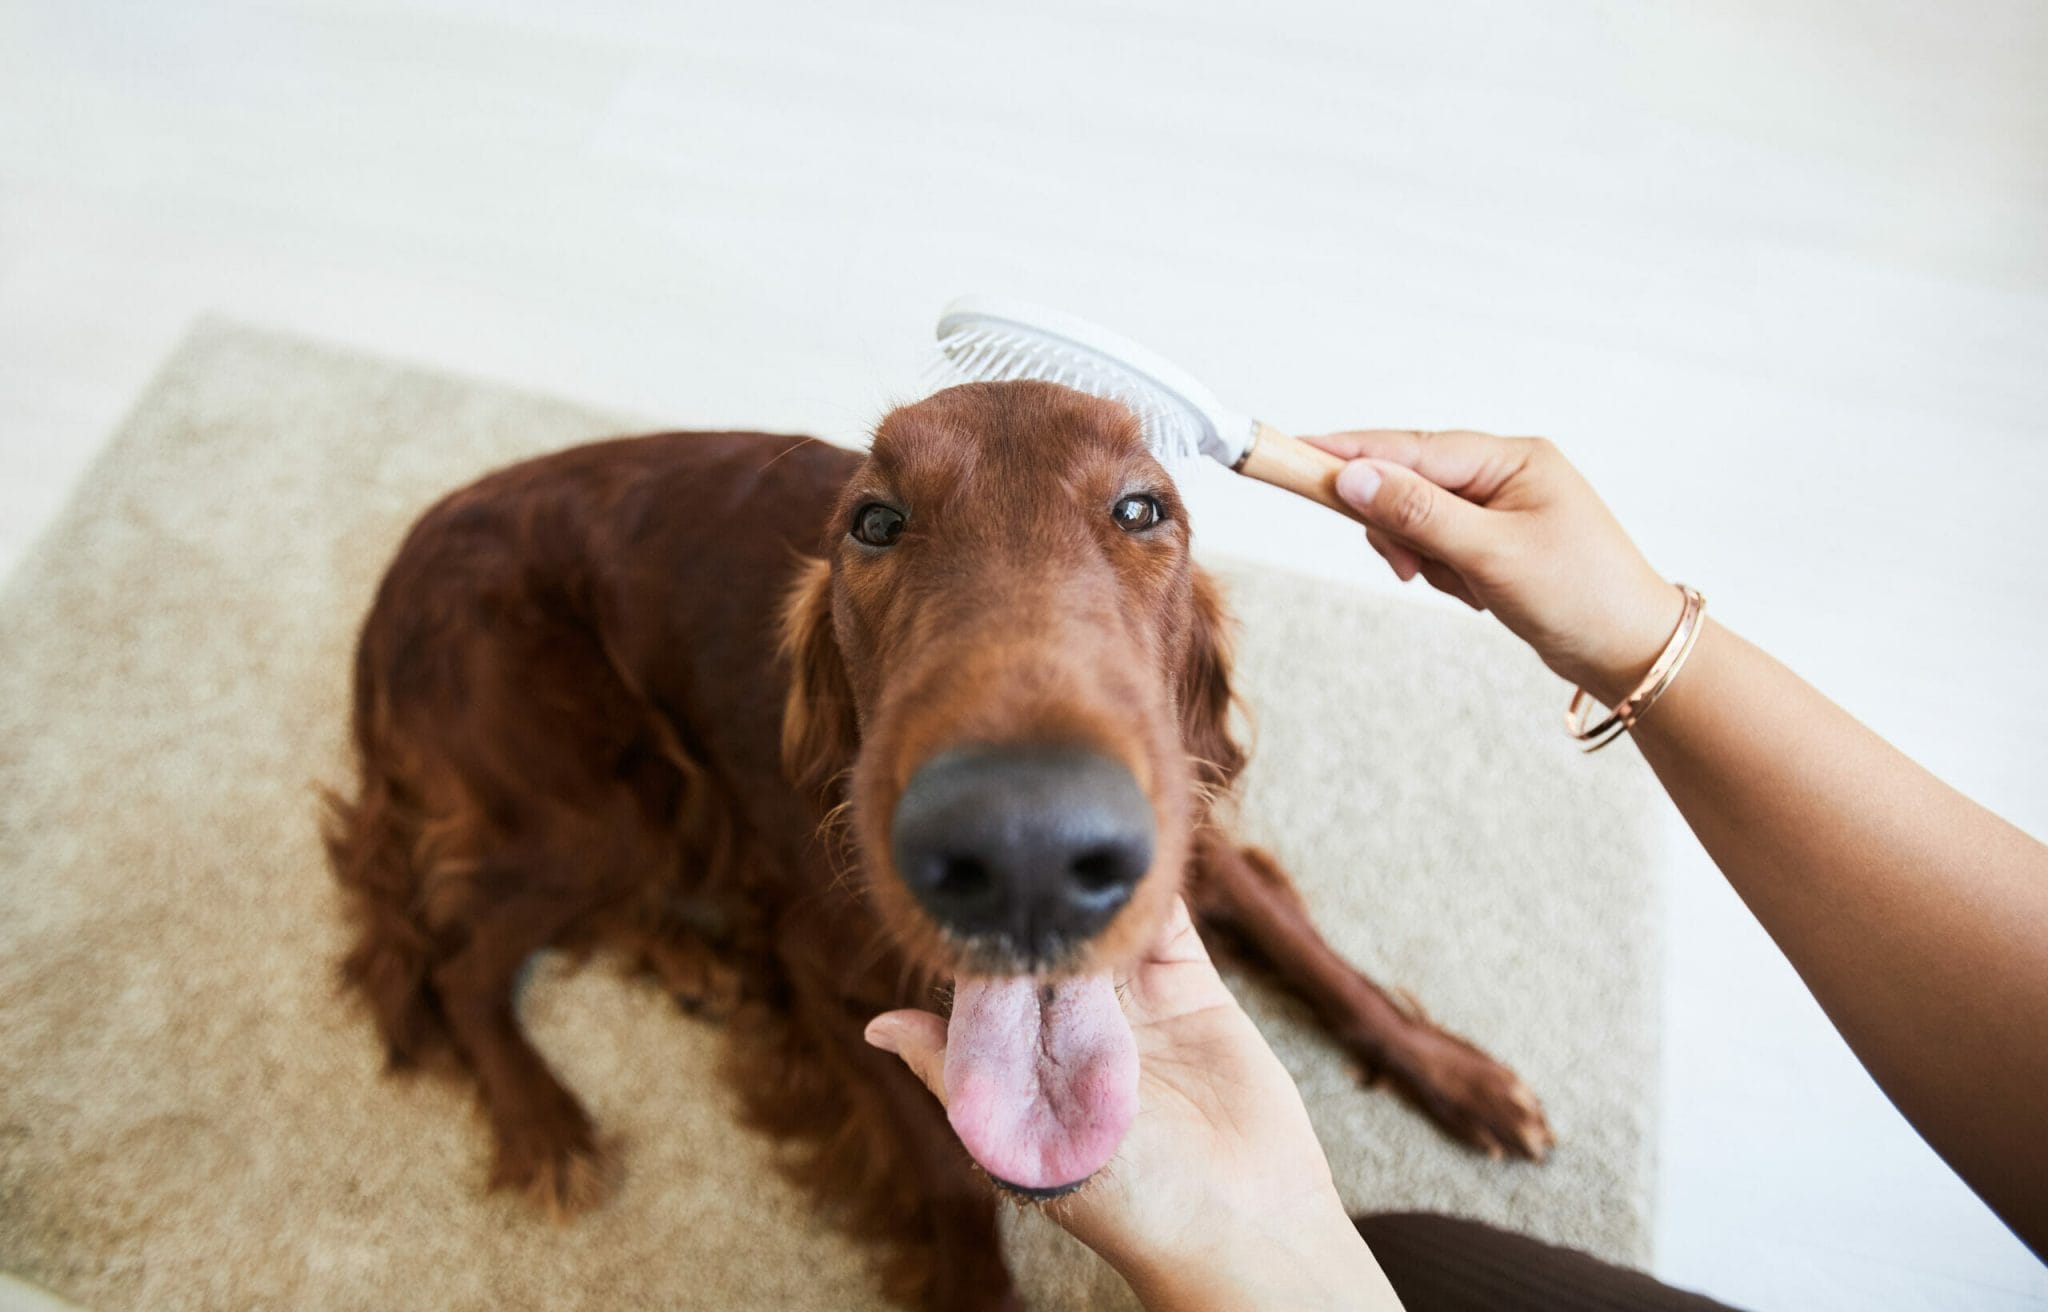 Brush your dog regularly